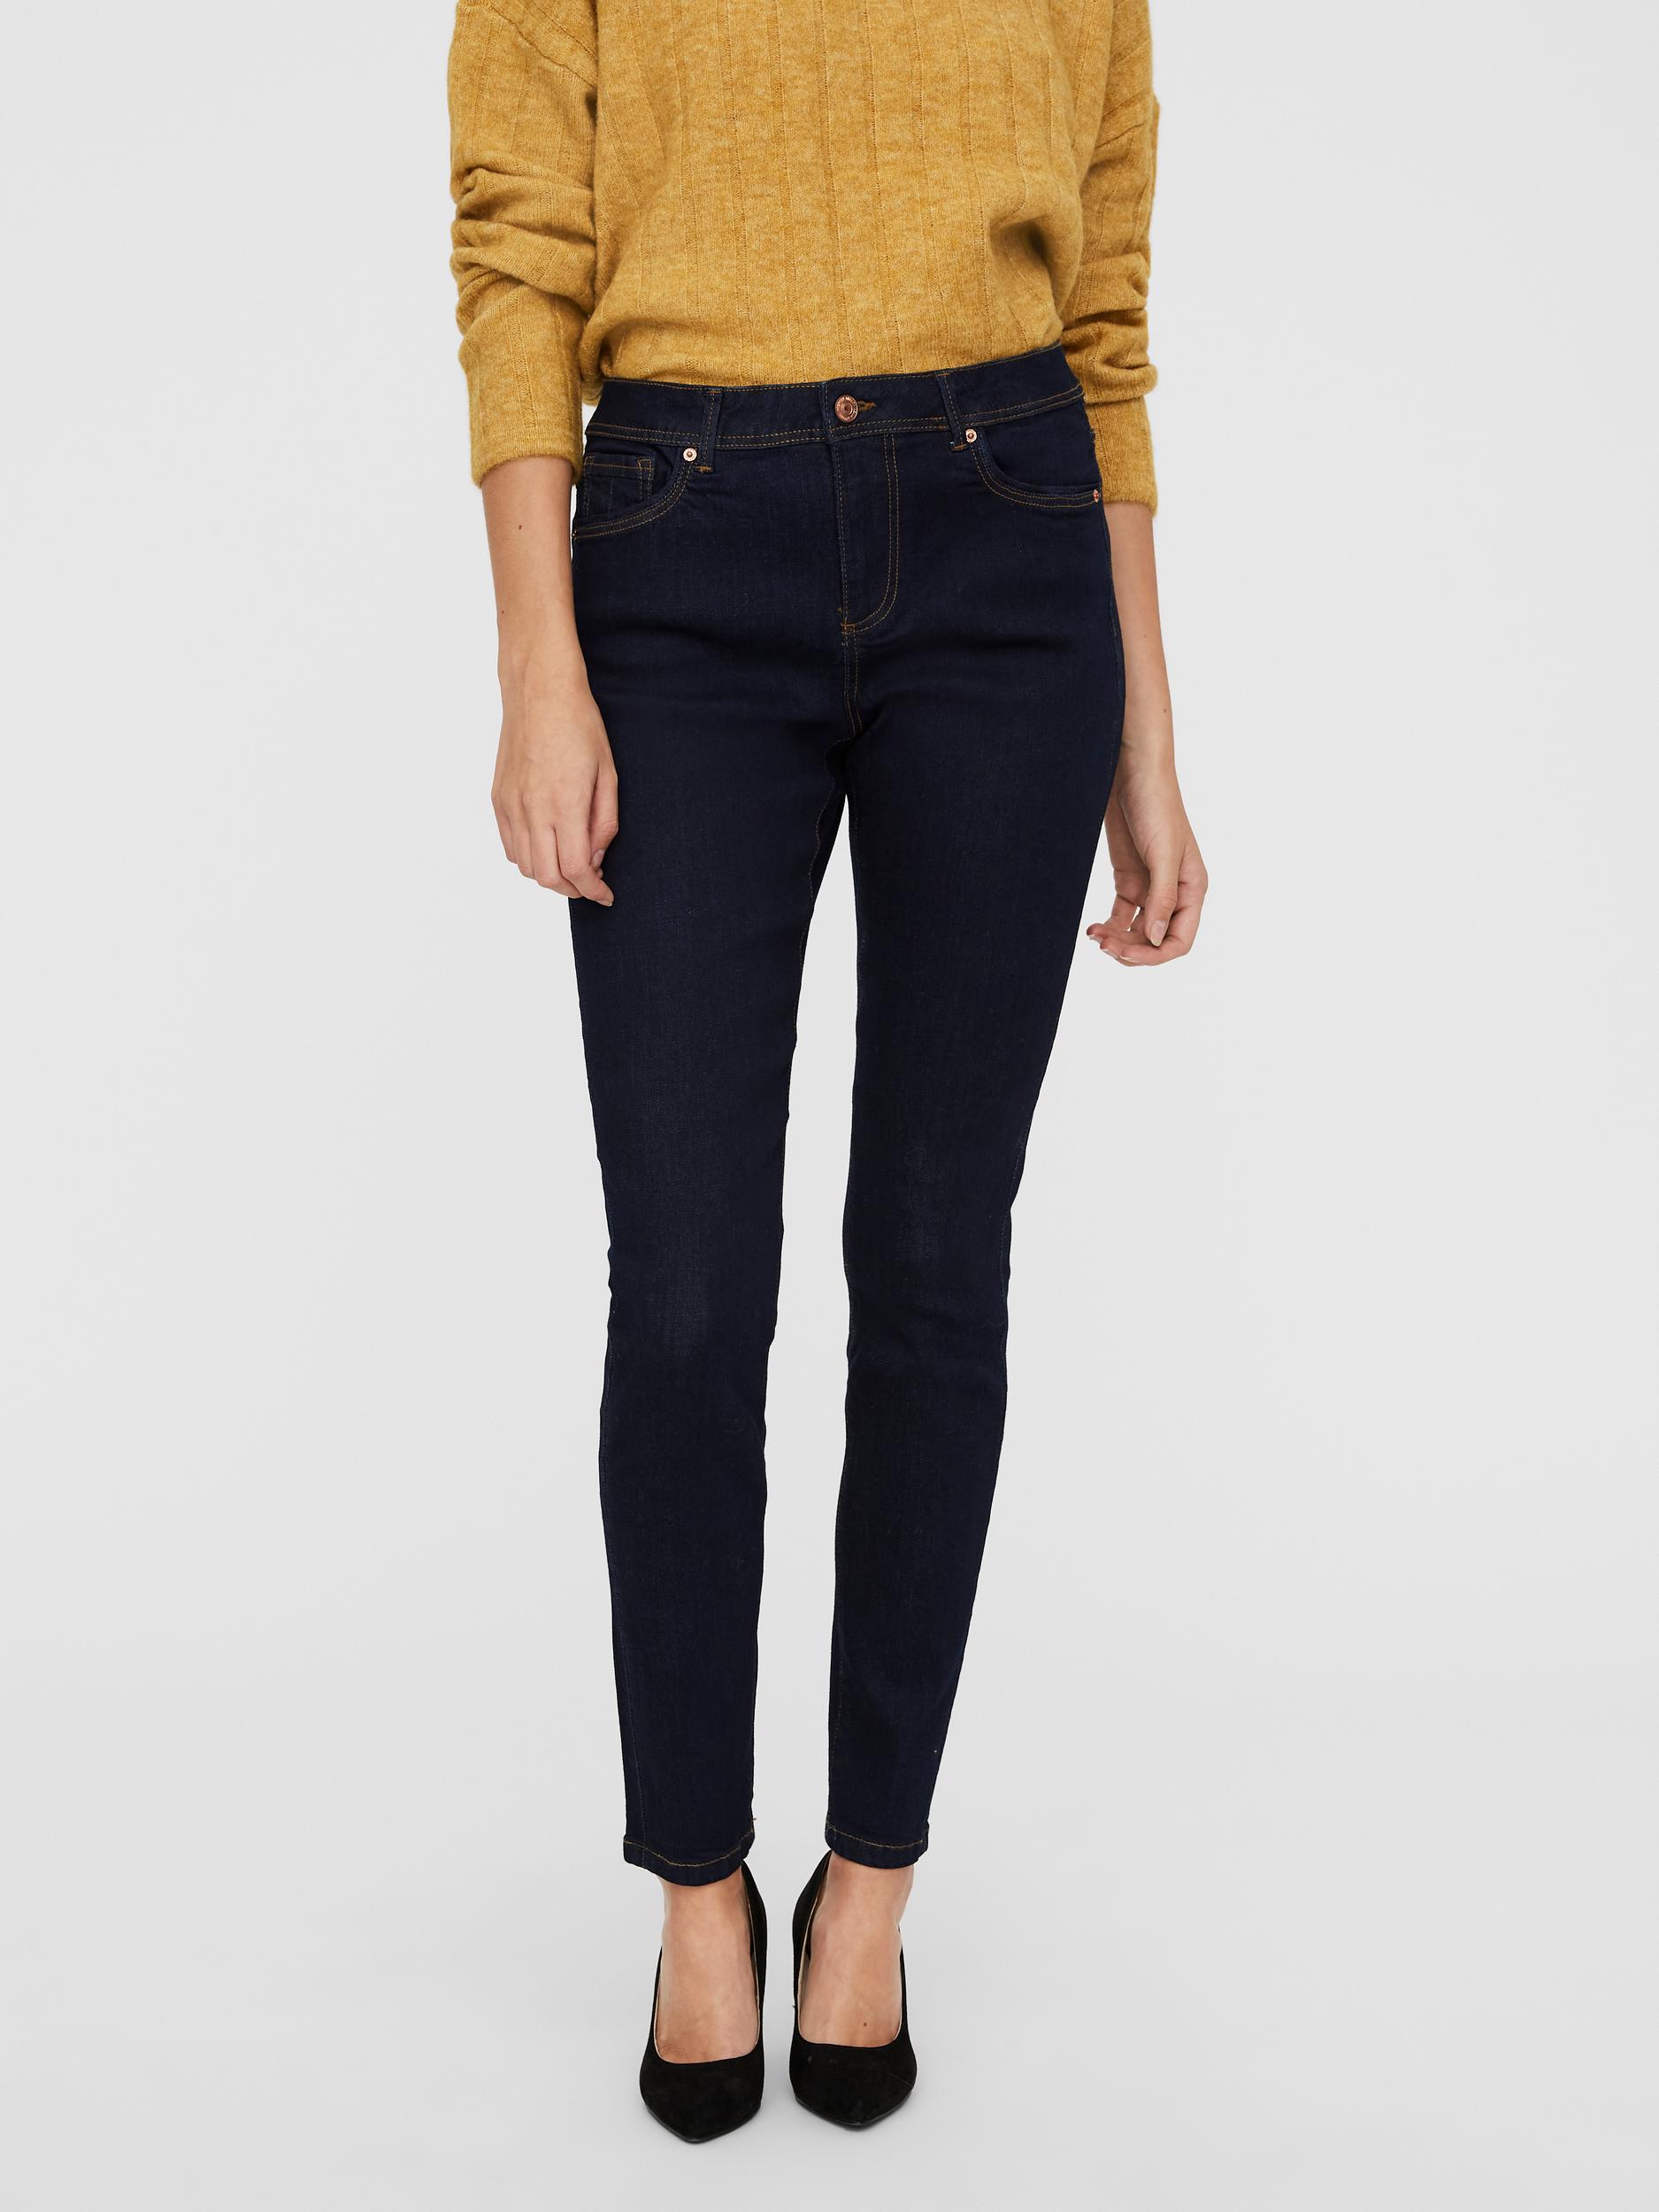 FINAL SALE - Tanya mid waist skinny fit jeans, DARK BLUE DENIM, large